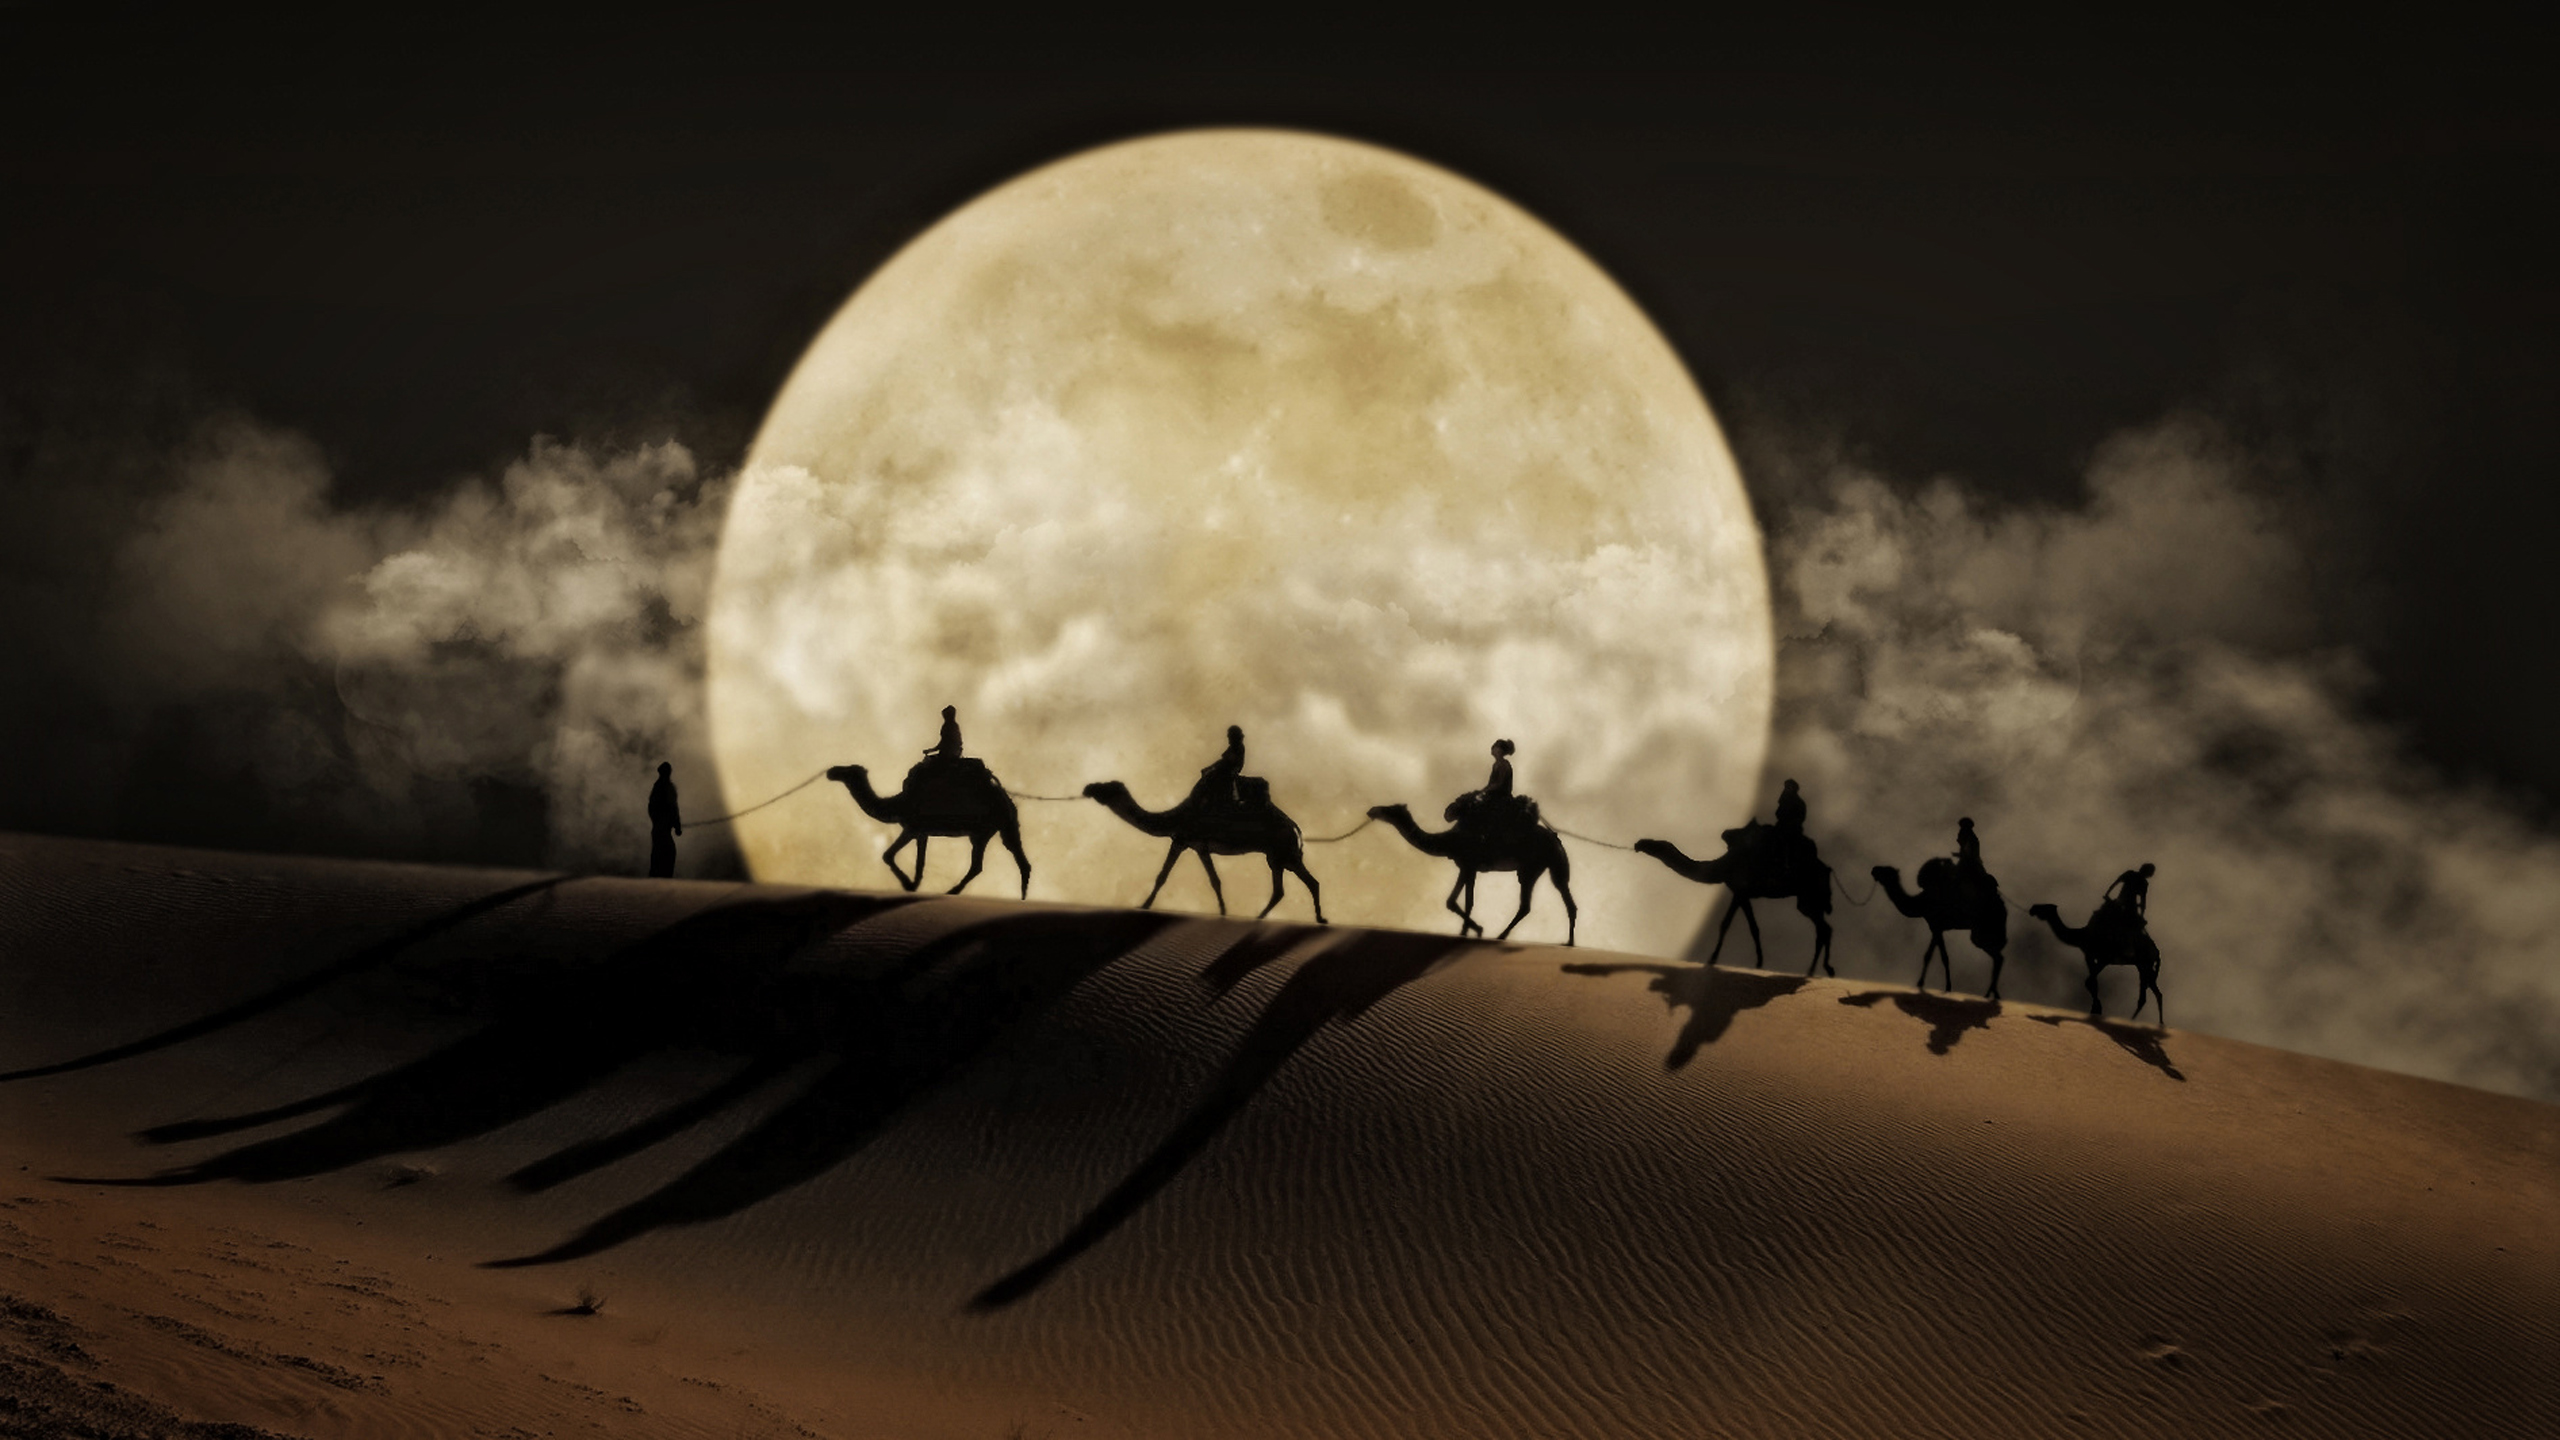 Desert Moon Camel Art Desktop Wallpaper Hd For Mobile Phones And